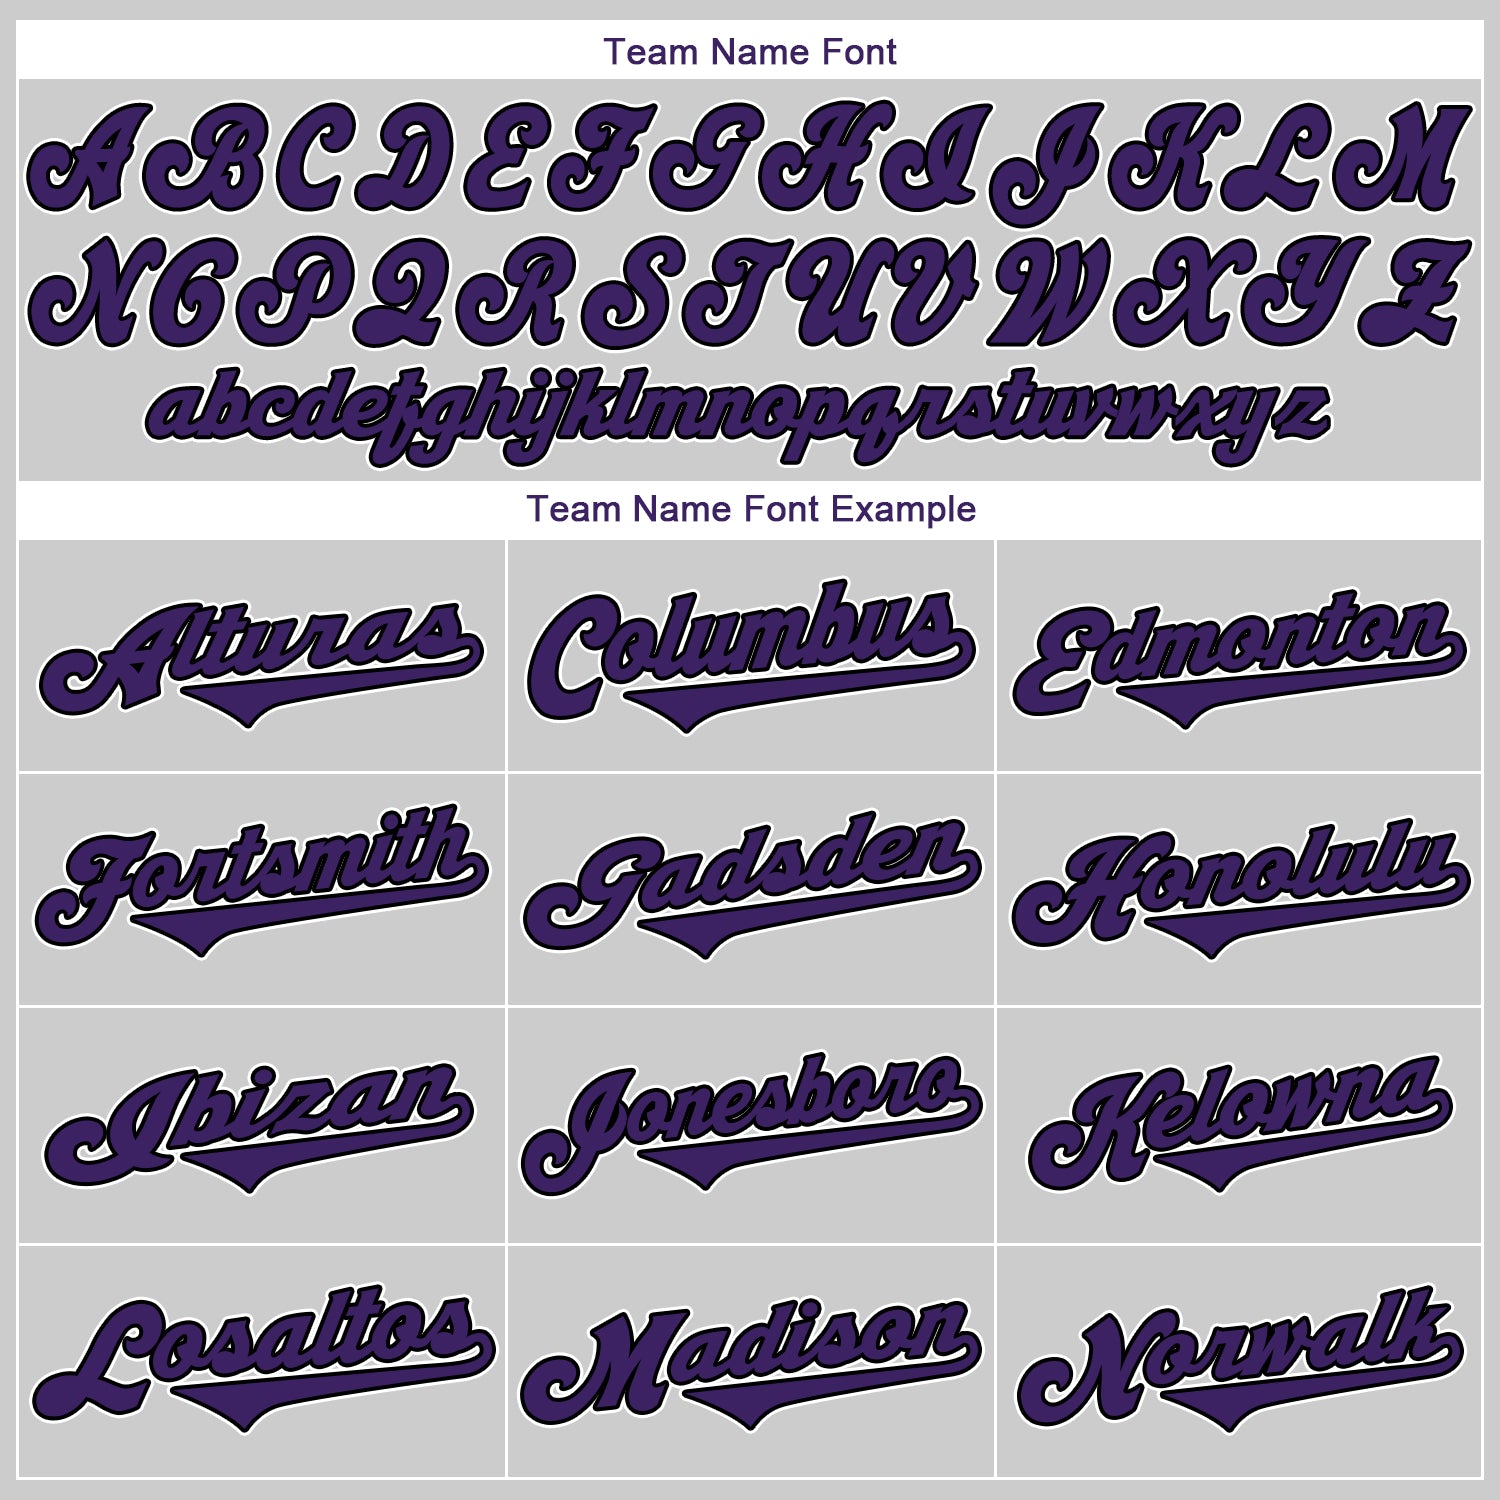 Custom Purple White-Black Authentic Baseball Jersey Men's Size:XL